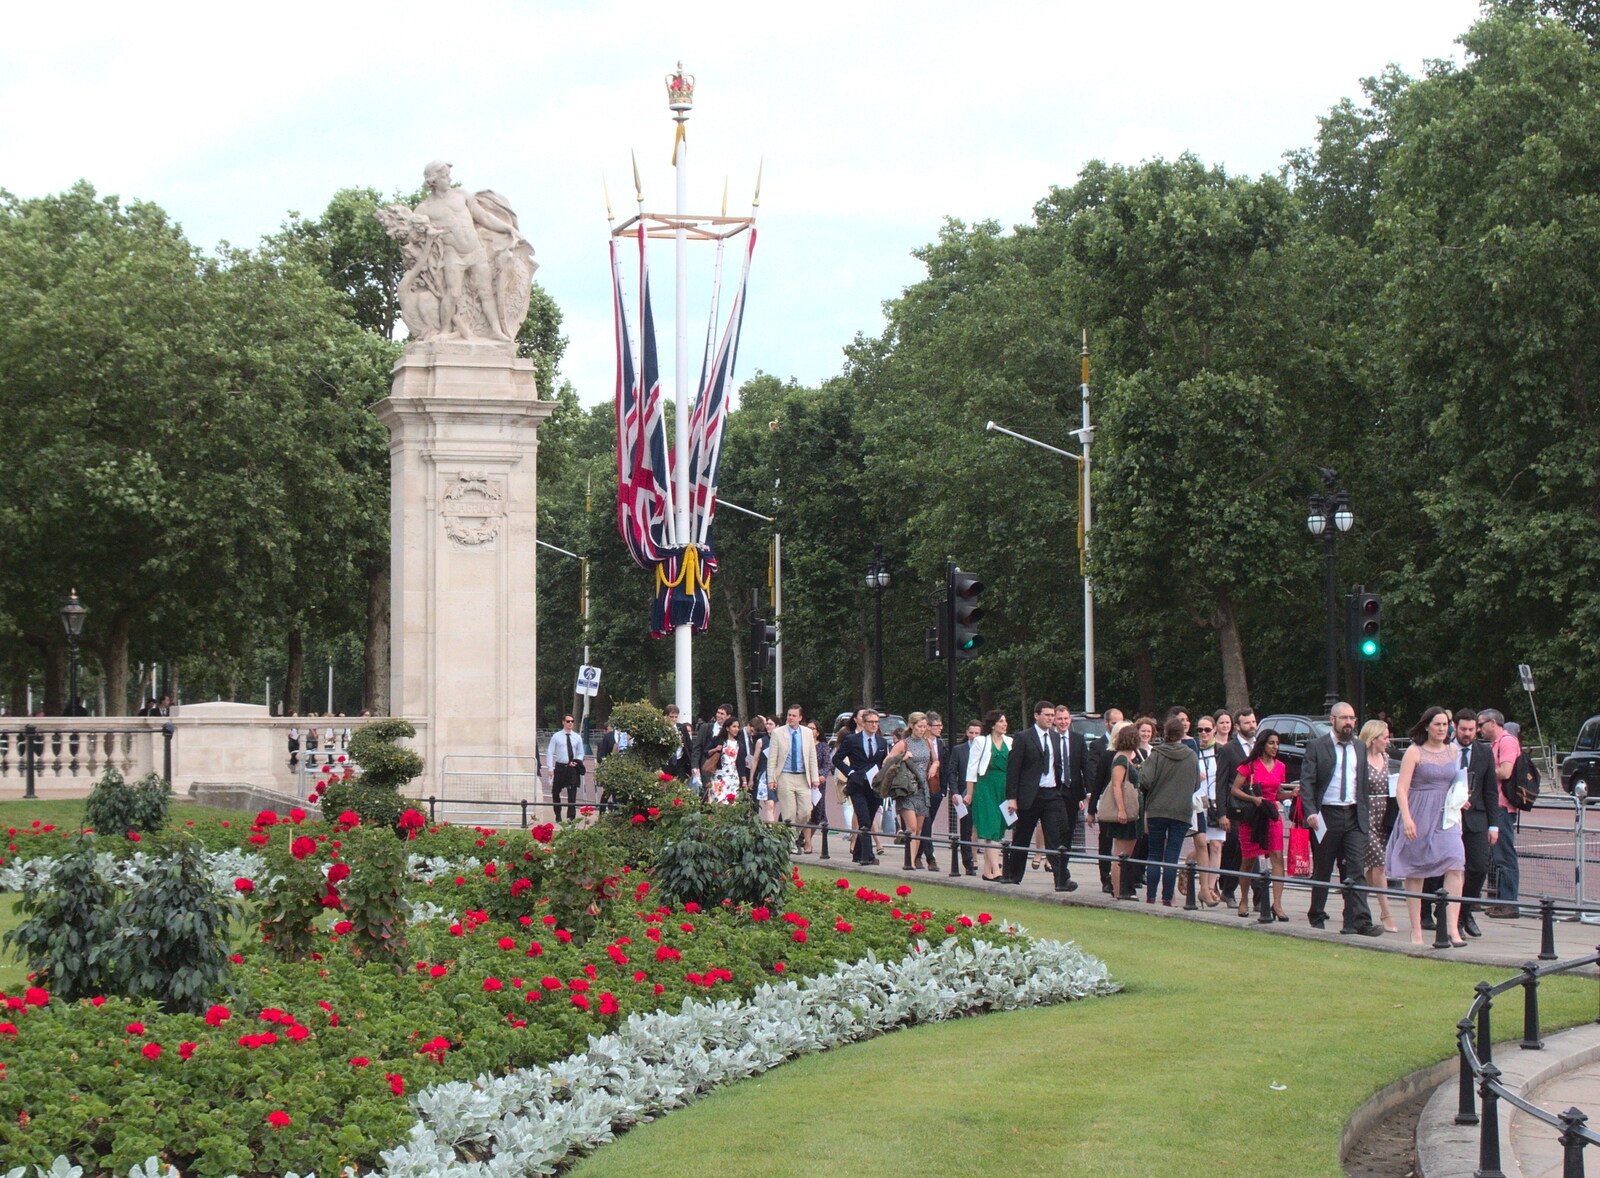 Garden party guests head to Buckingham Palace from SwiftKey's Hundred Million, Paddington, London - 13th June 2018